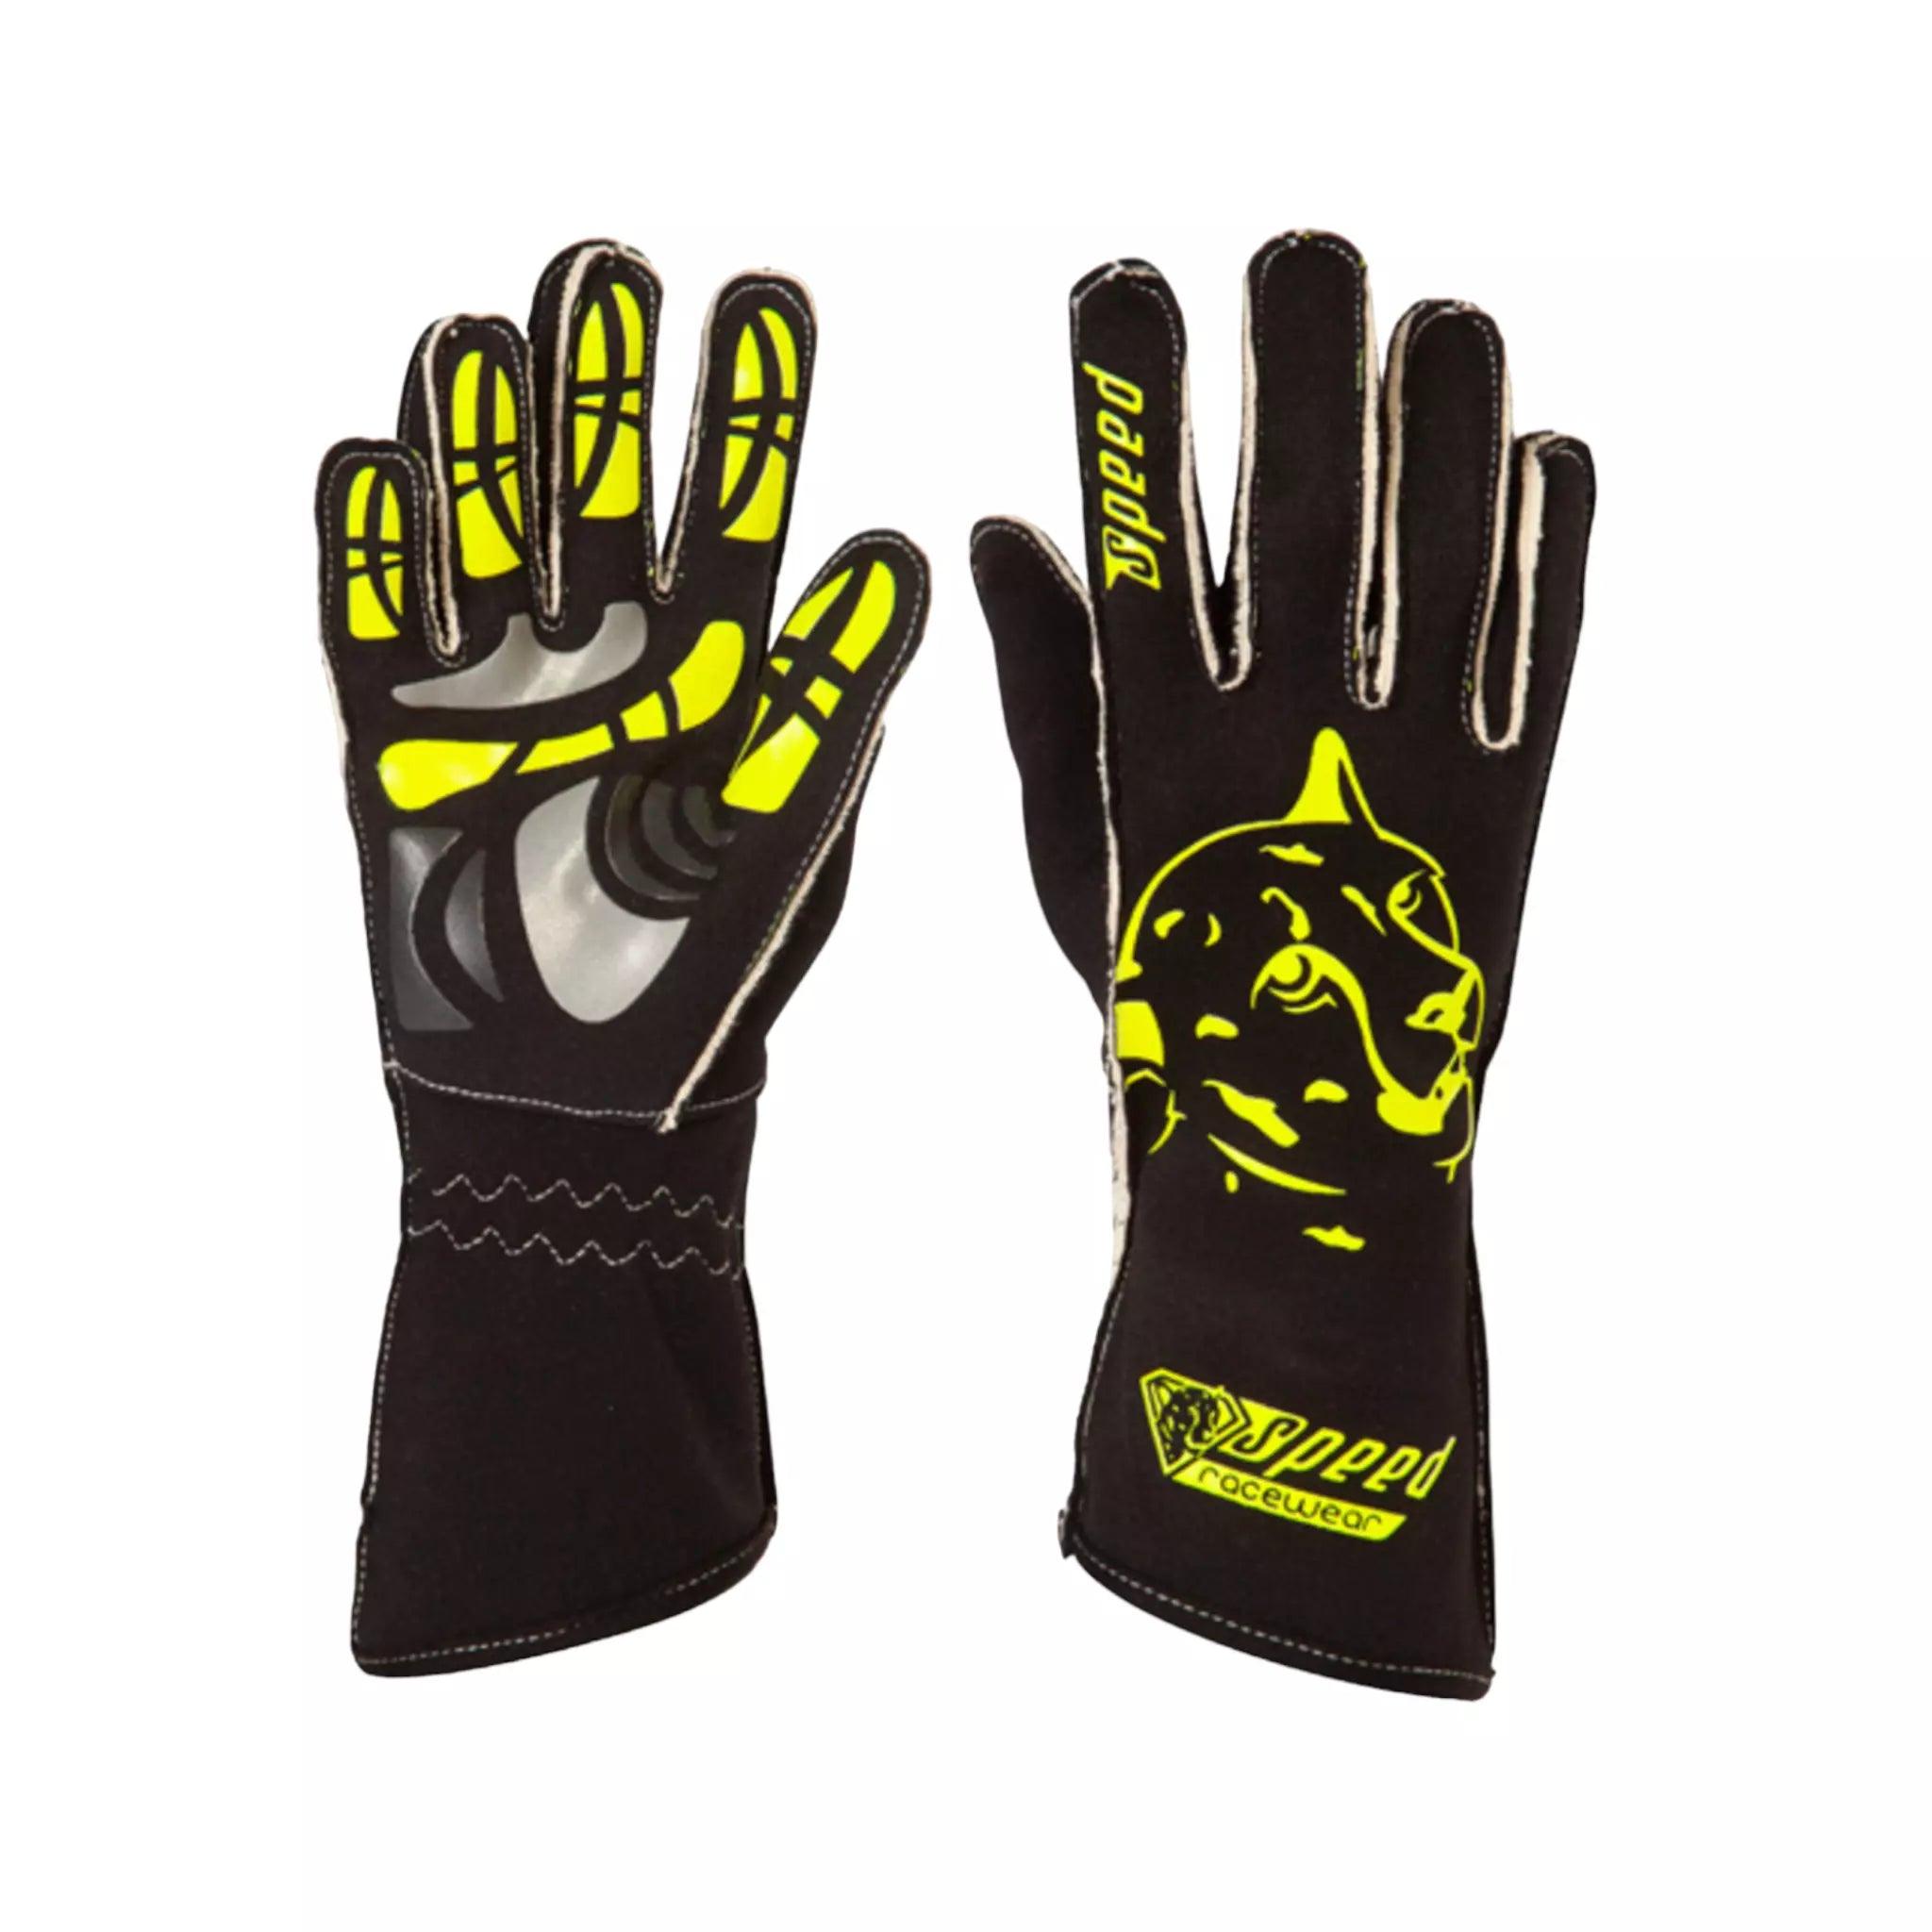 Speed gloves Melbourne G-2 Black/Fluo DASH RACEGEAR